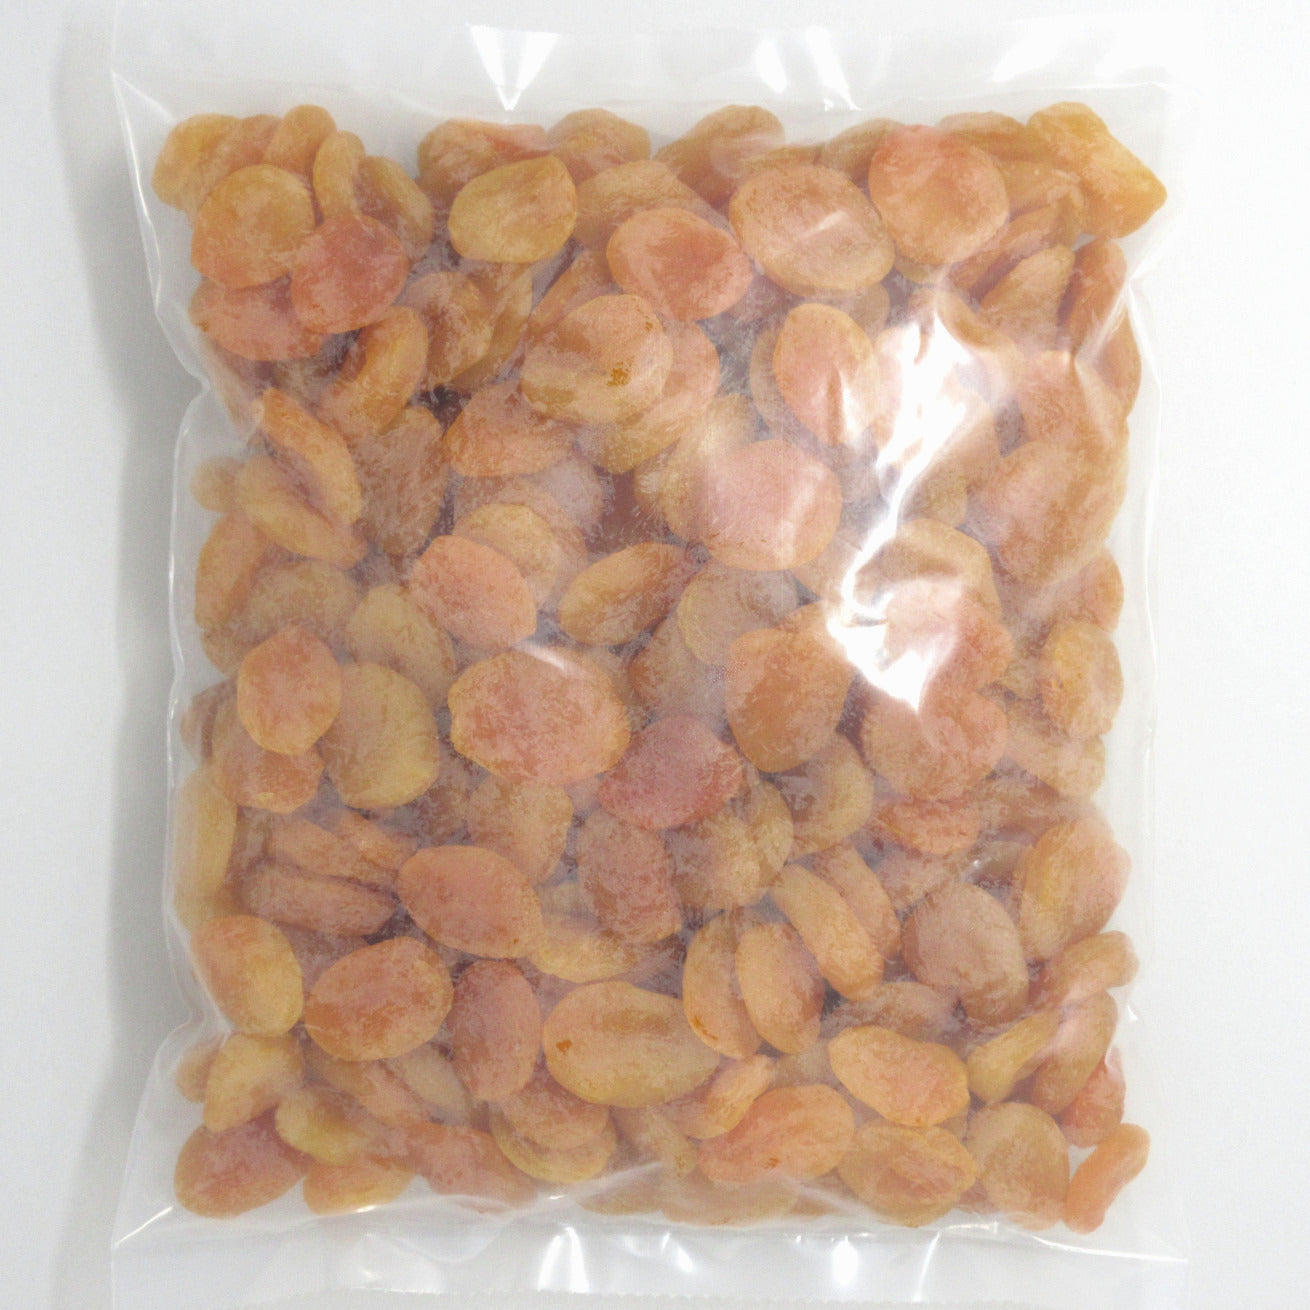 Flour Barrel product image - Dried Apricots